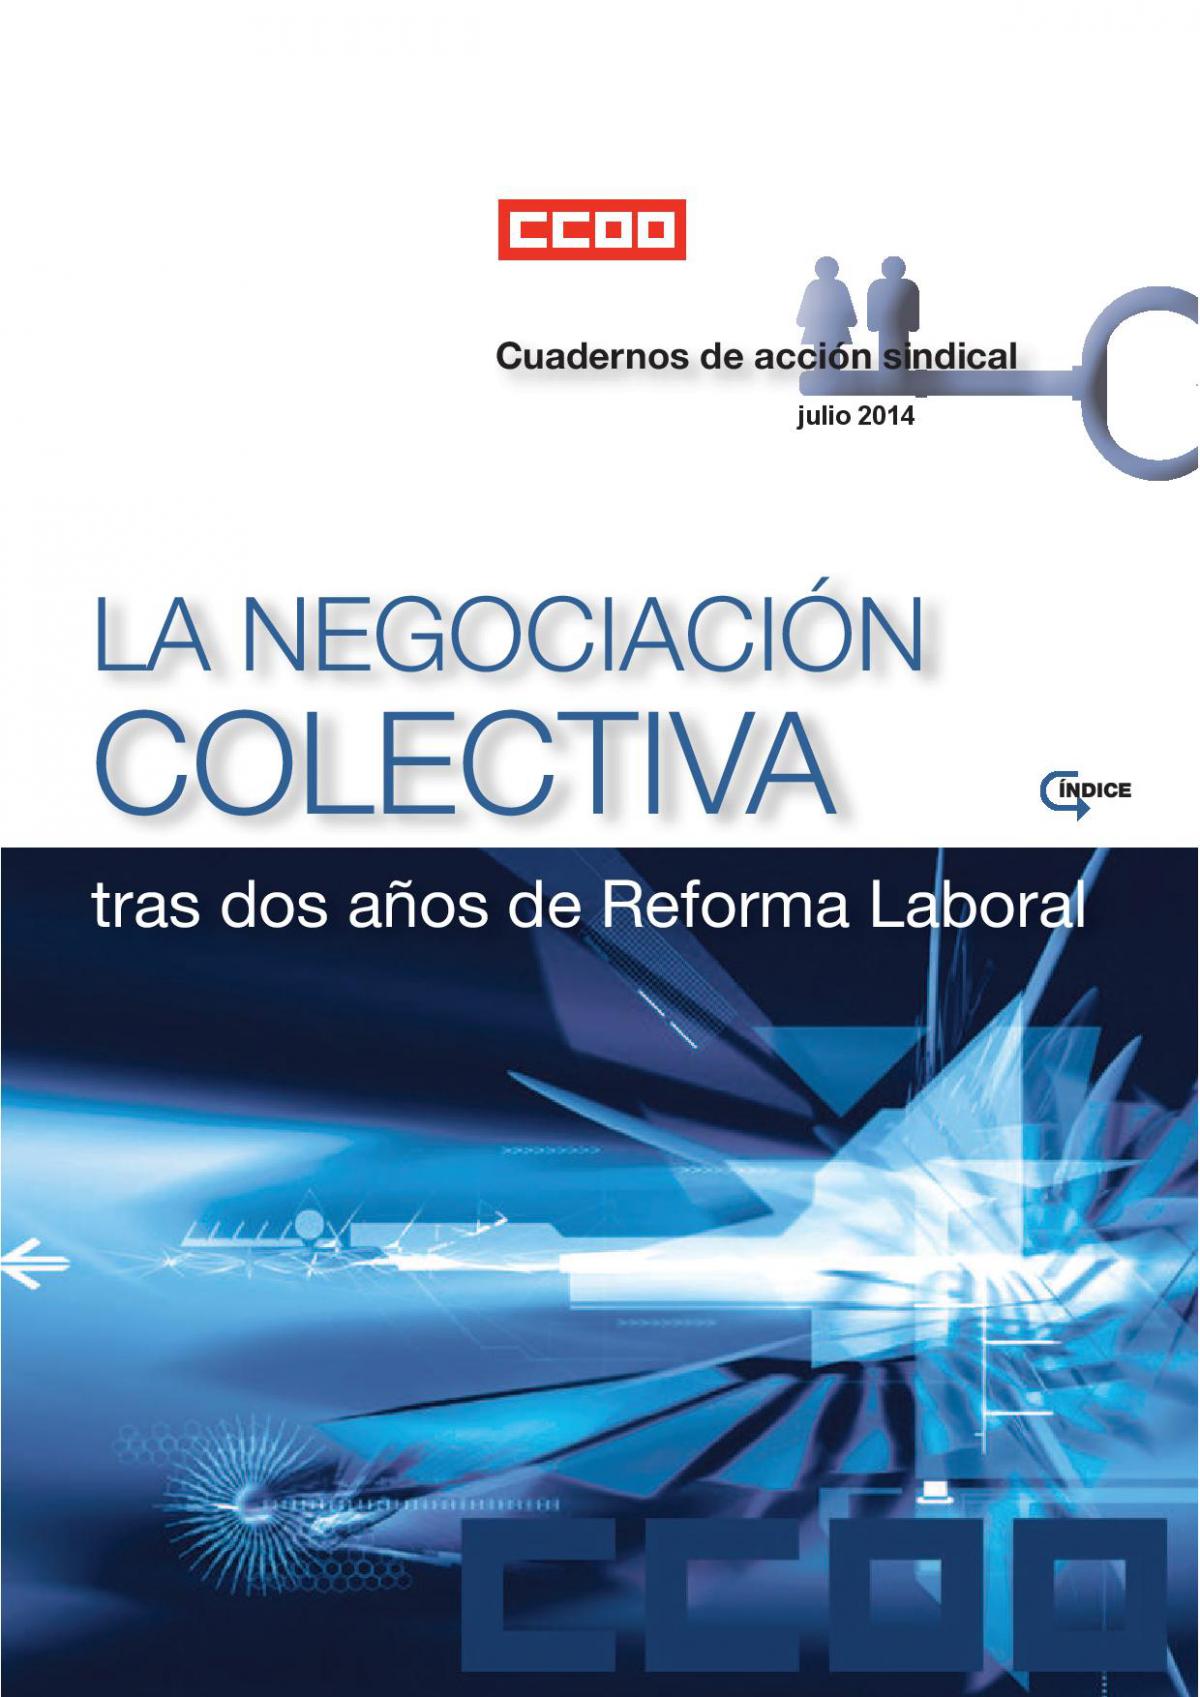 Cuaderno de Informacin Sindical sobre Negociacin Colectiva tras dos aos de reforma laboral 